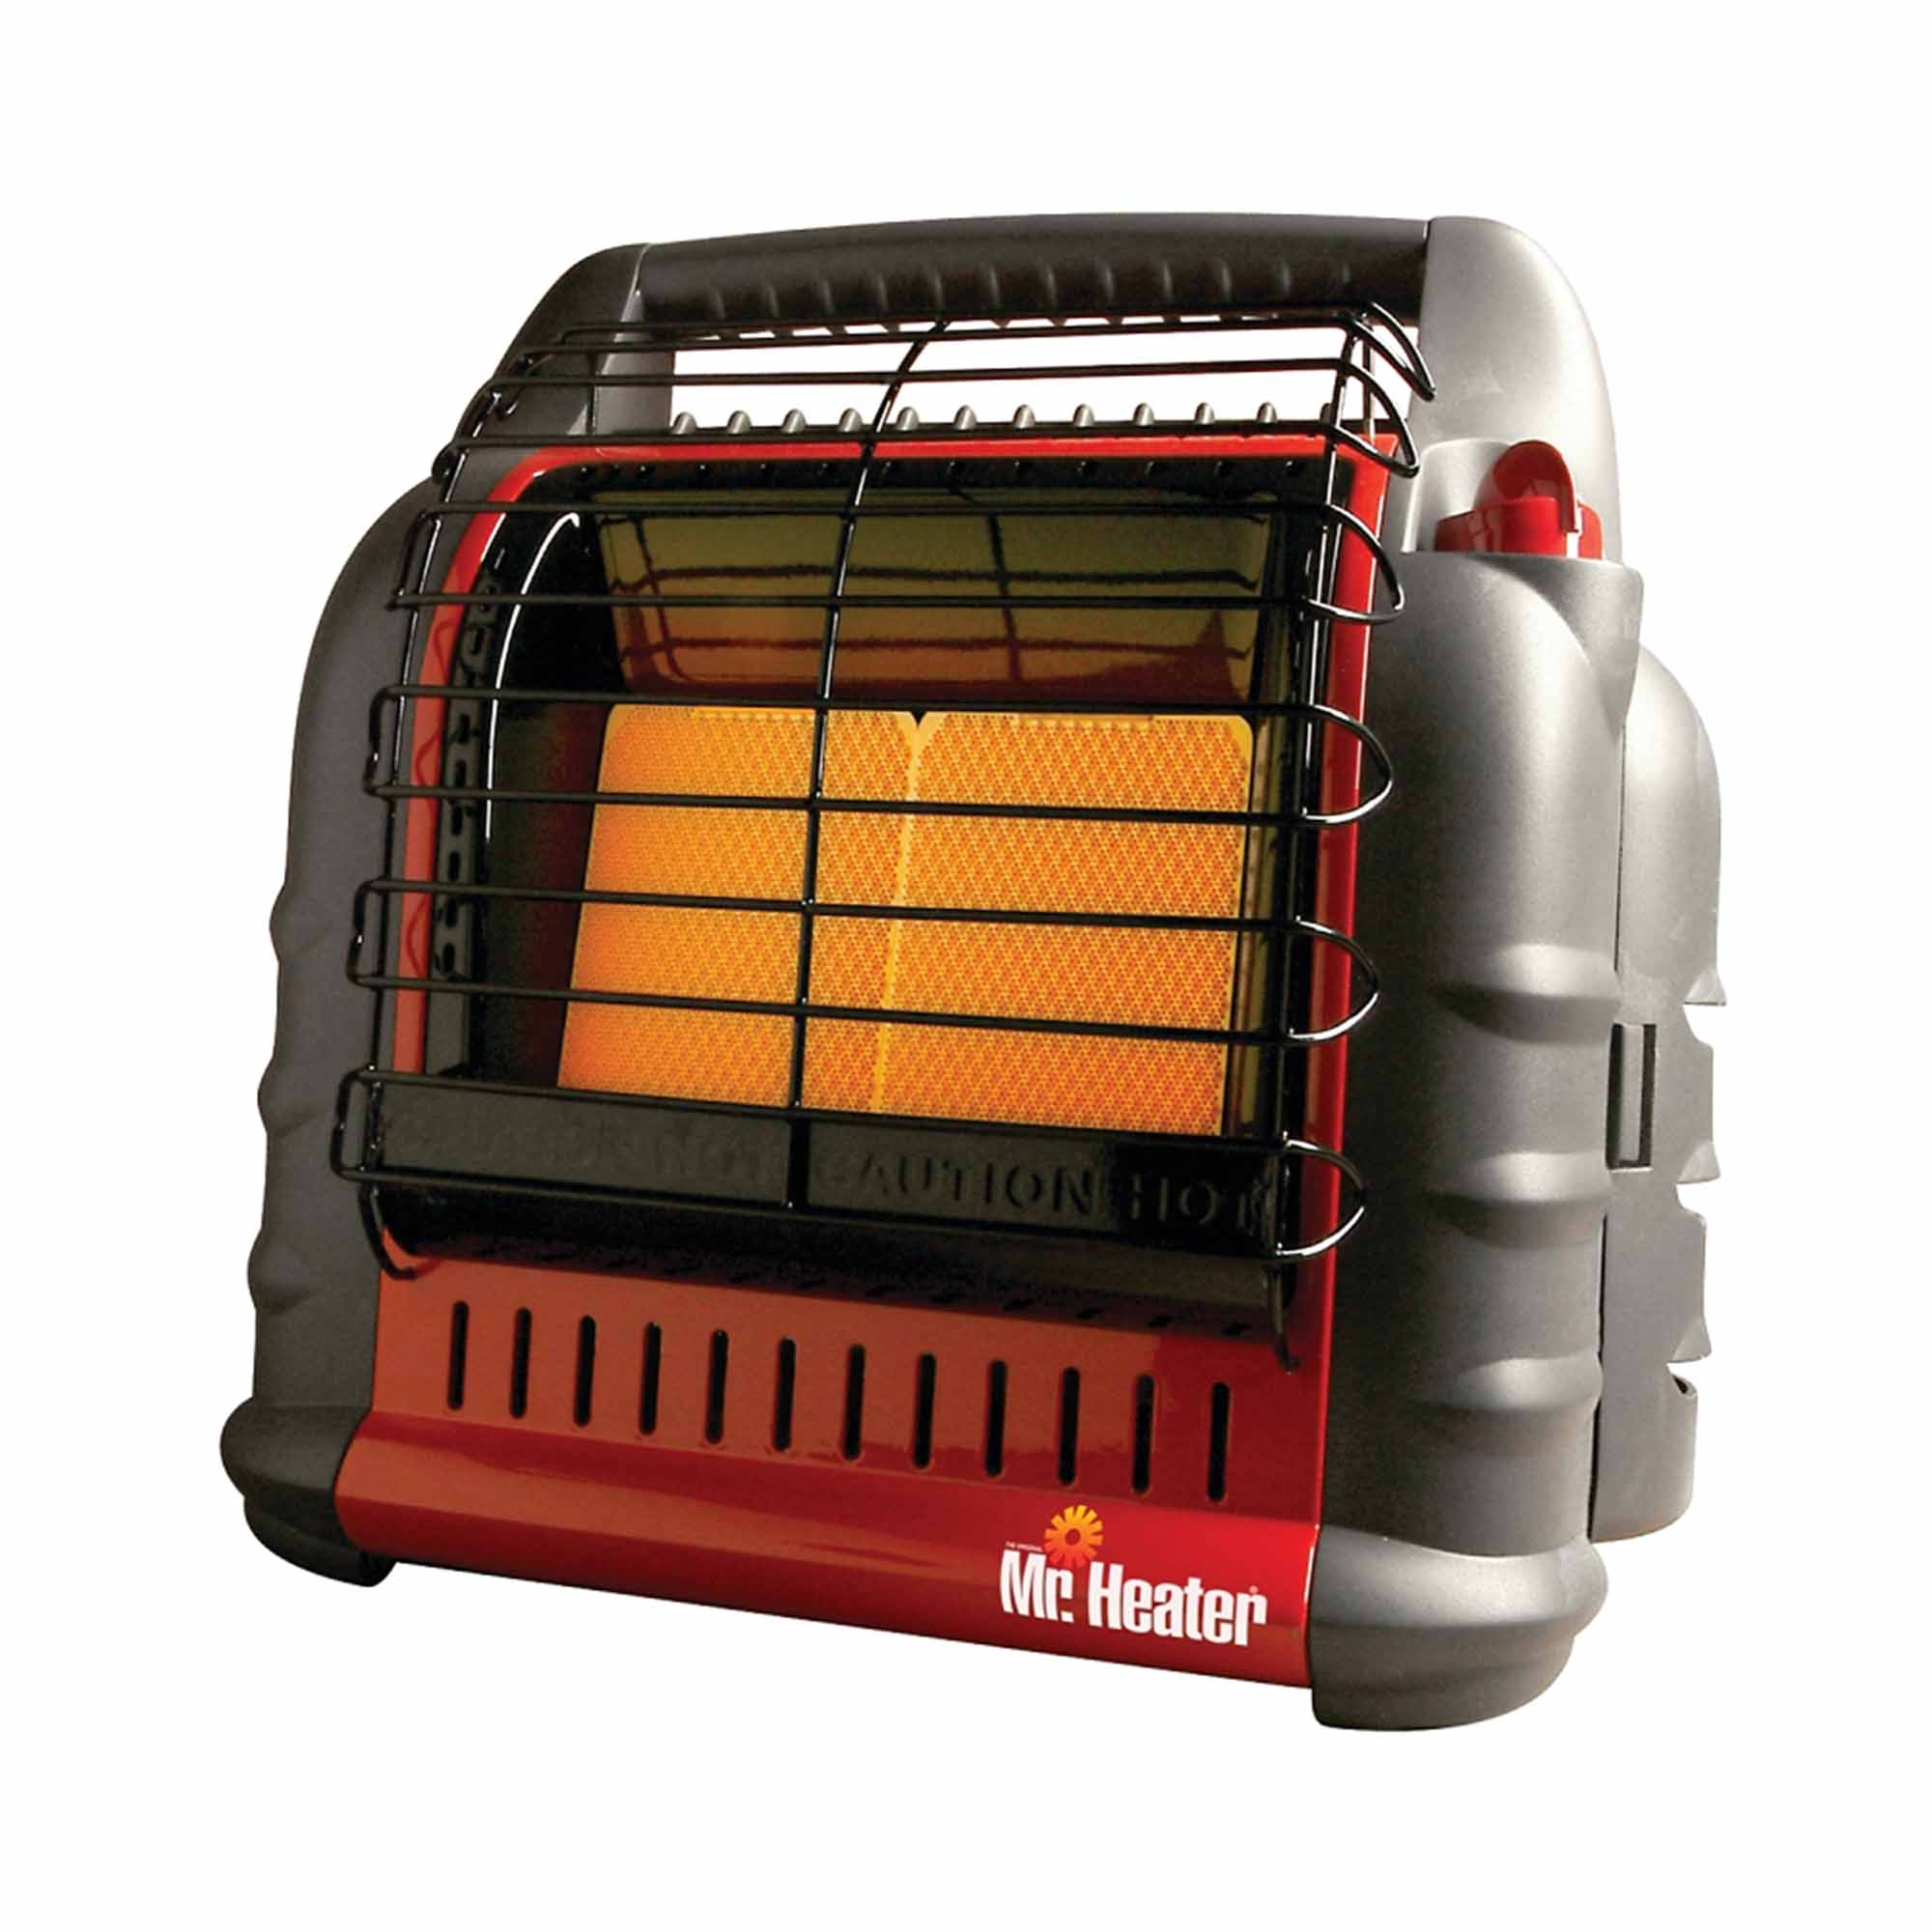 18,000 BTU Large Portable Propane Heater - Mr Heater